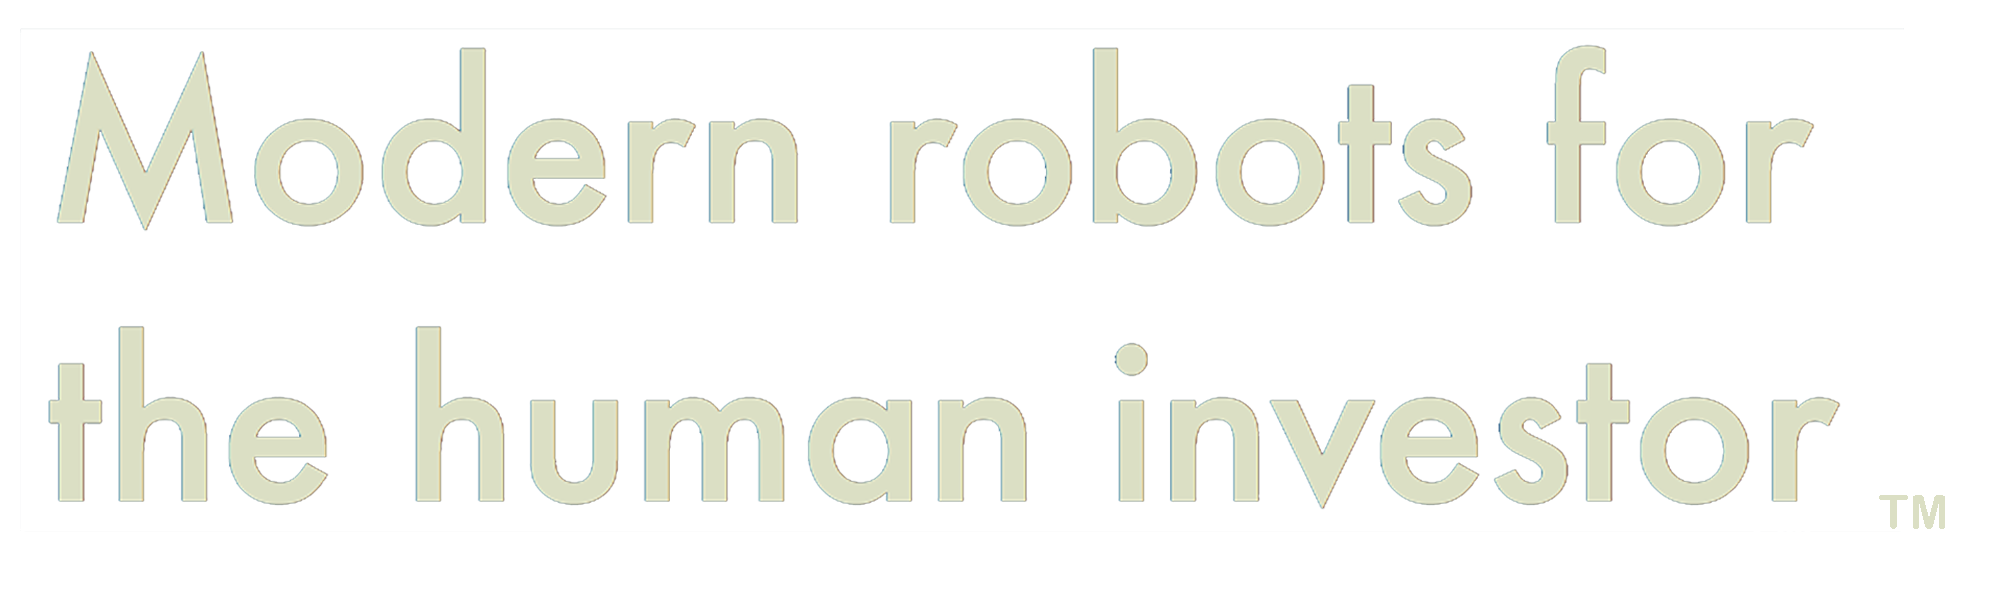 Modern robots for human investors